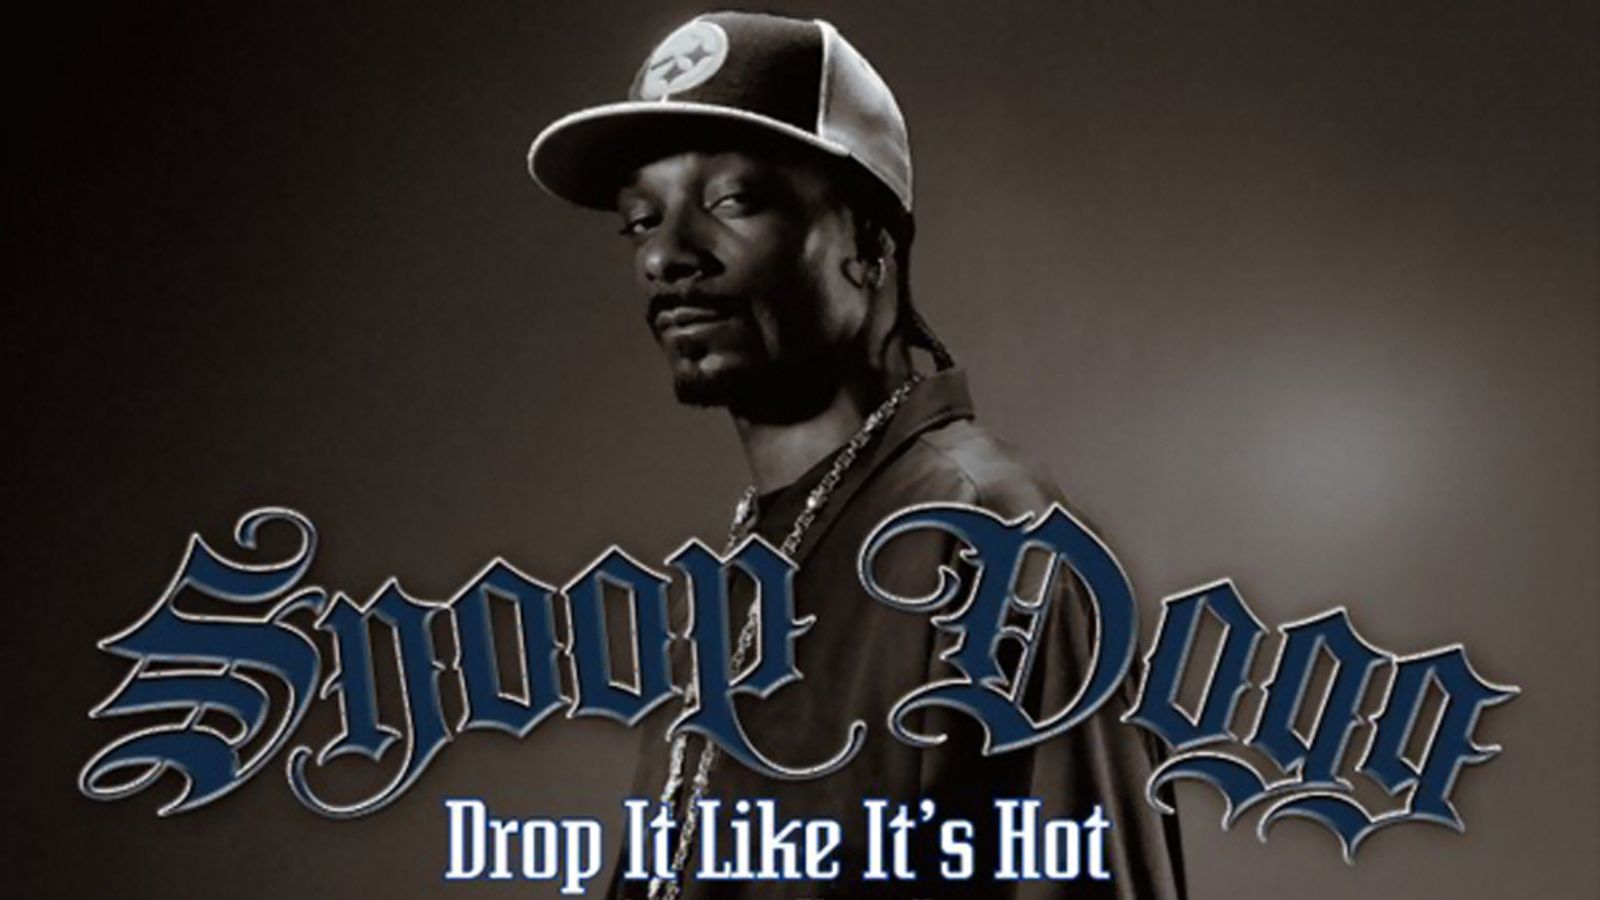 Snoop dogg drop it like. Snoop Dogg. Snoop Dogg Drop it like it's hot. Дроп ИТ лайк ИТС хот обложка снуп дог. Тупак и снуп дог фото на обои.